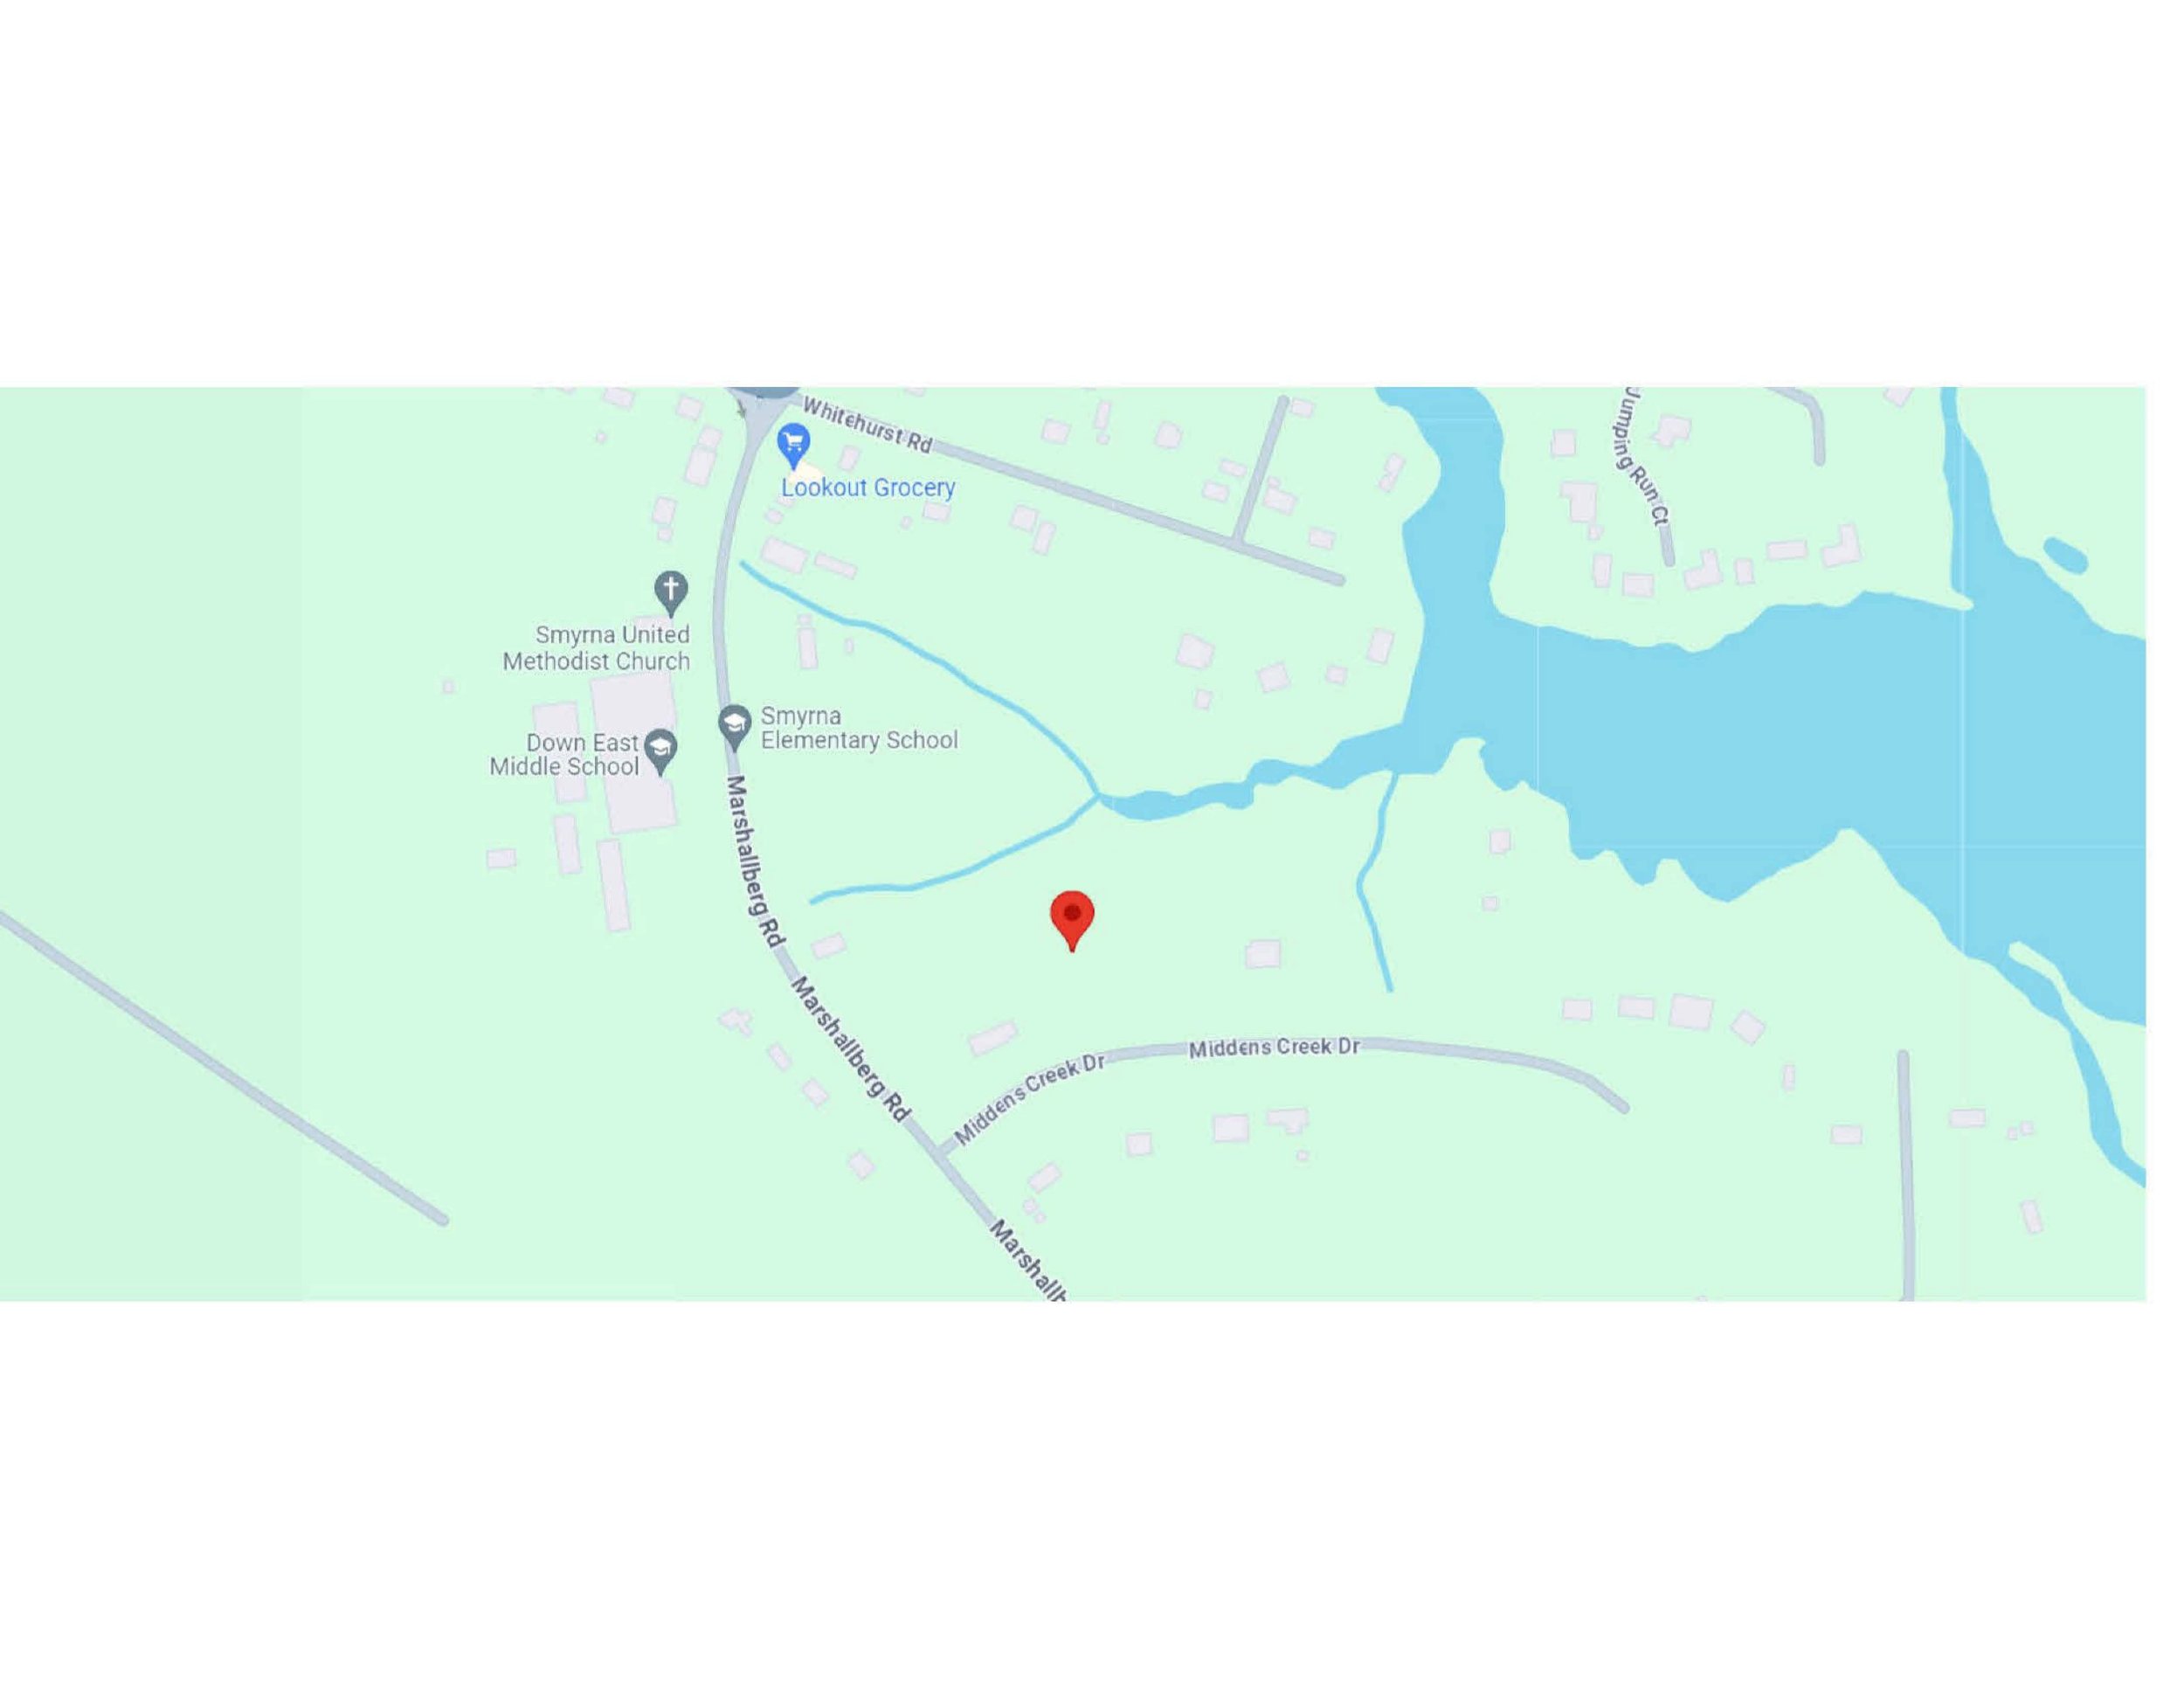 103 Middens Creek Dr. Smyrna, NC 28579_Google_Map.jpg